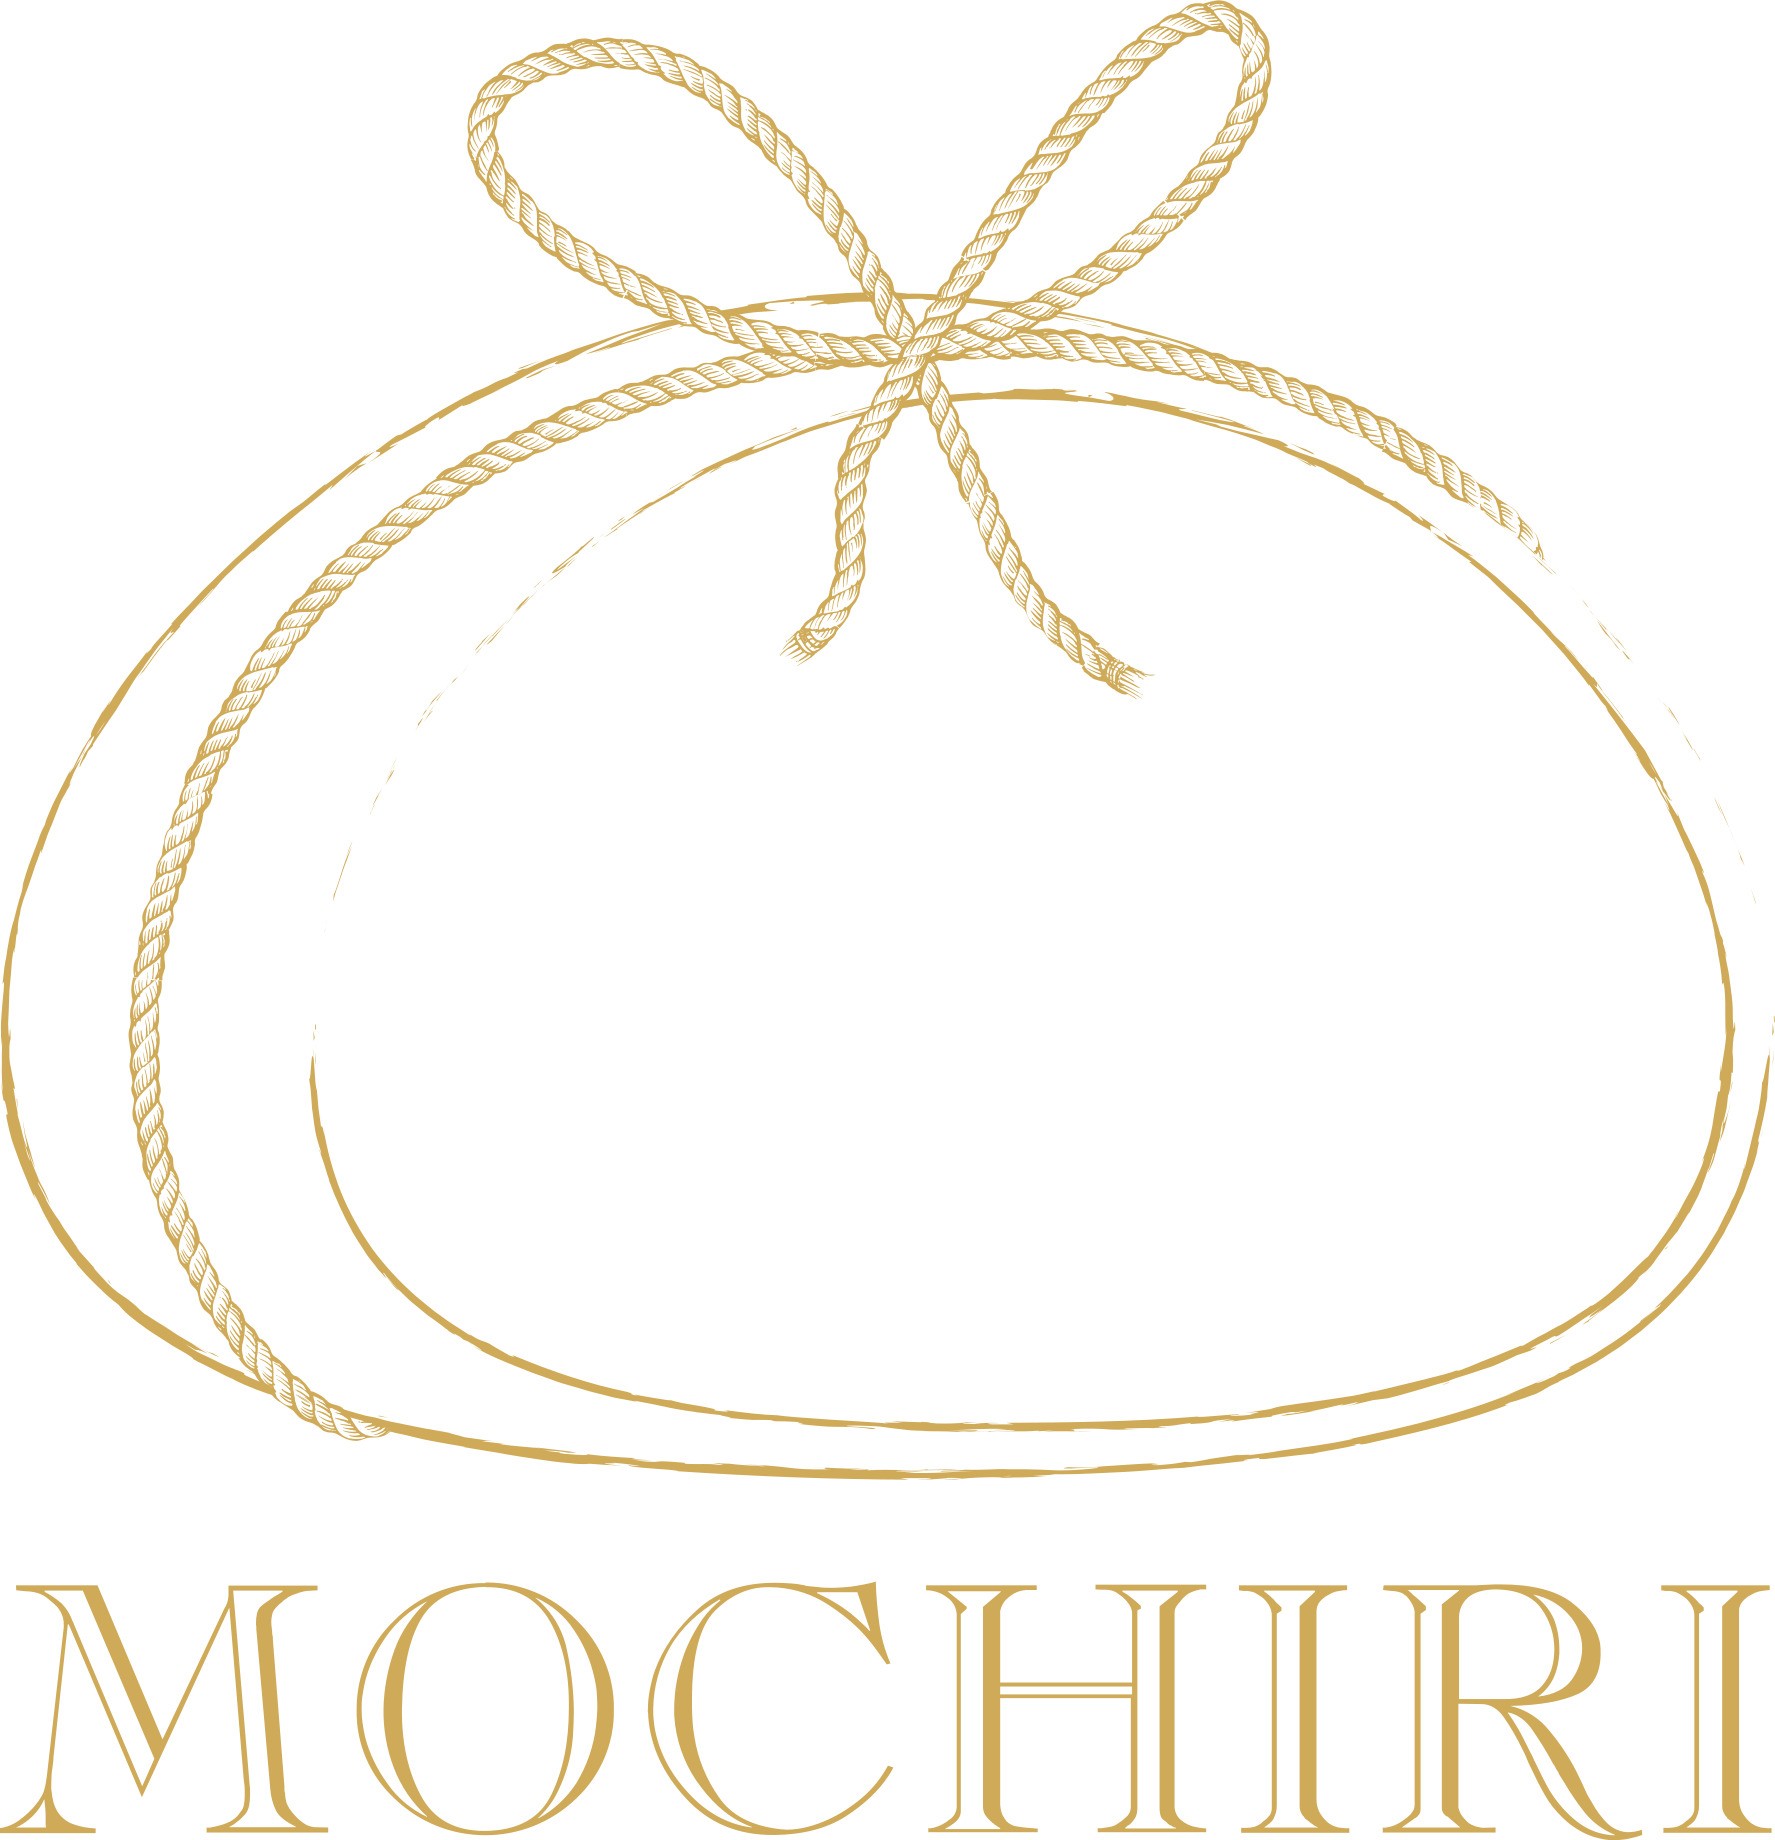 Mochiri